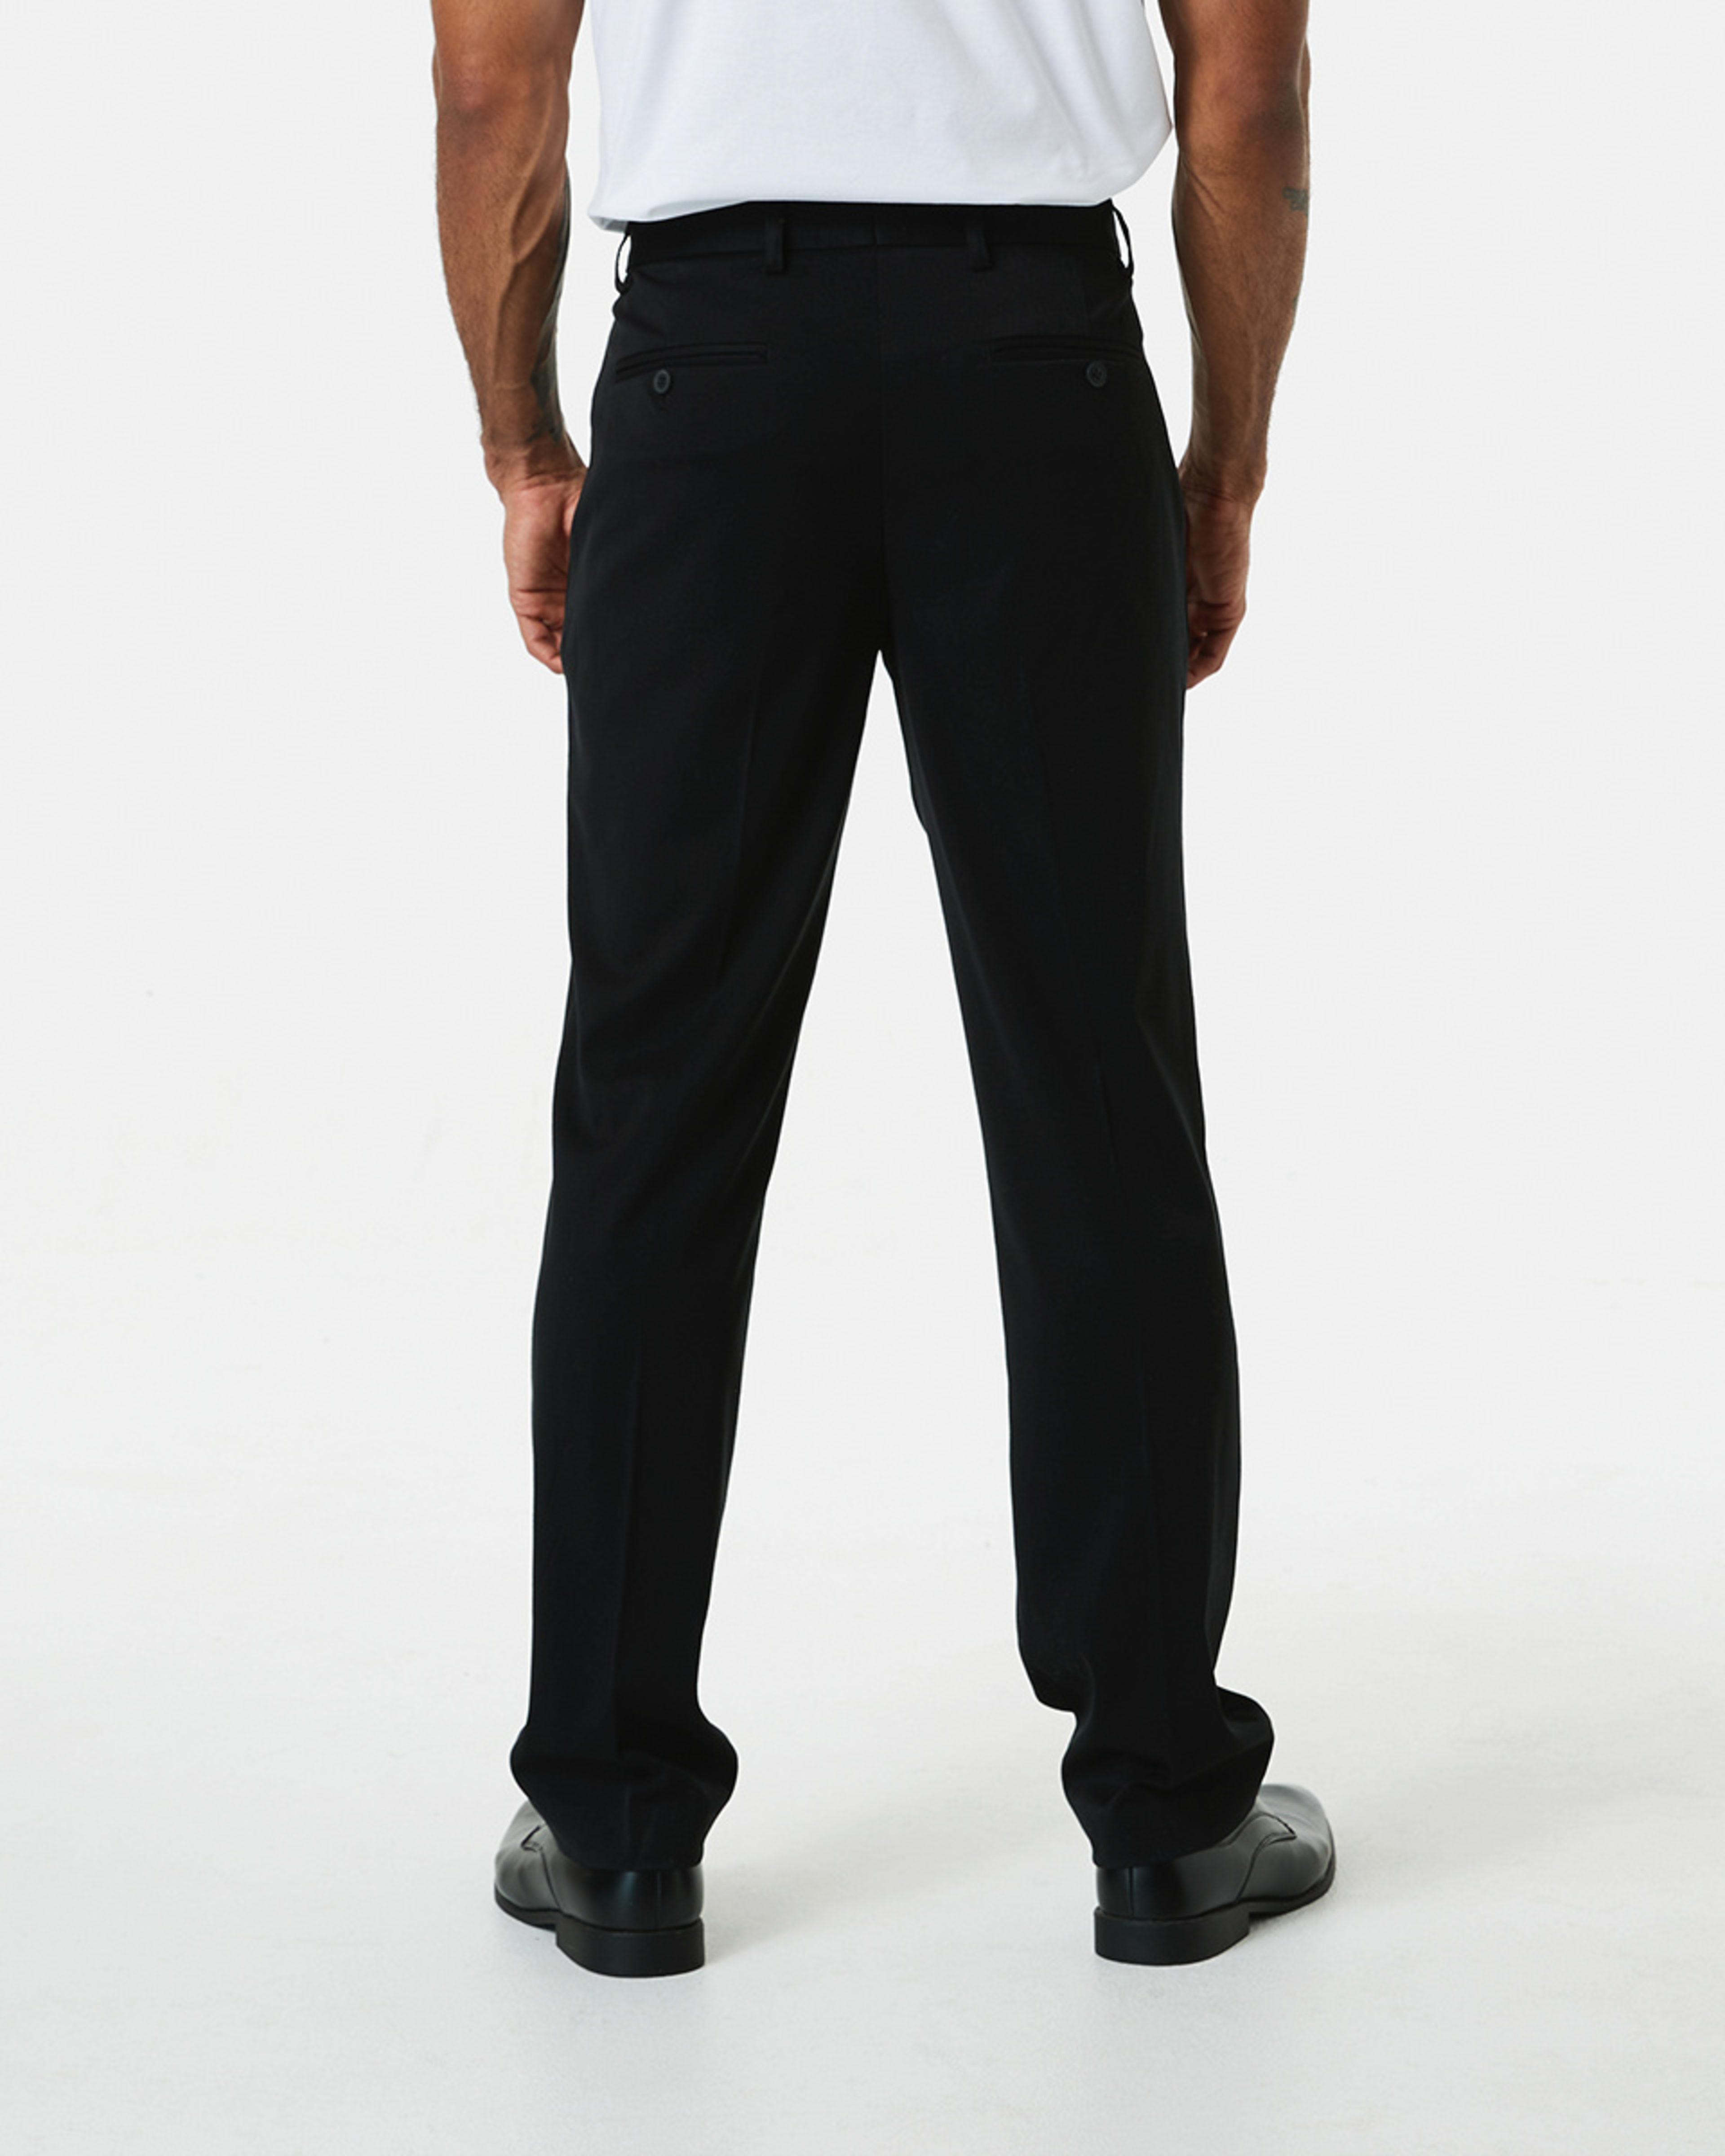 Workwear Slim Fit Business Pants - Kmart